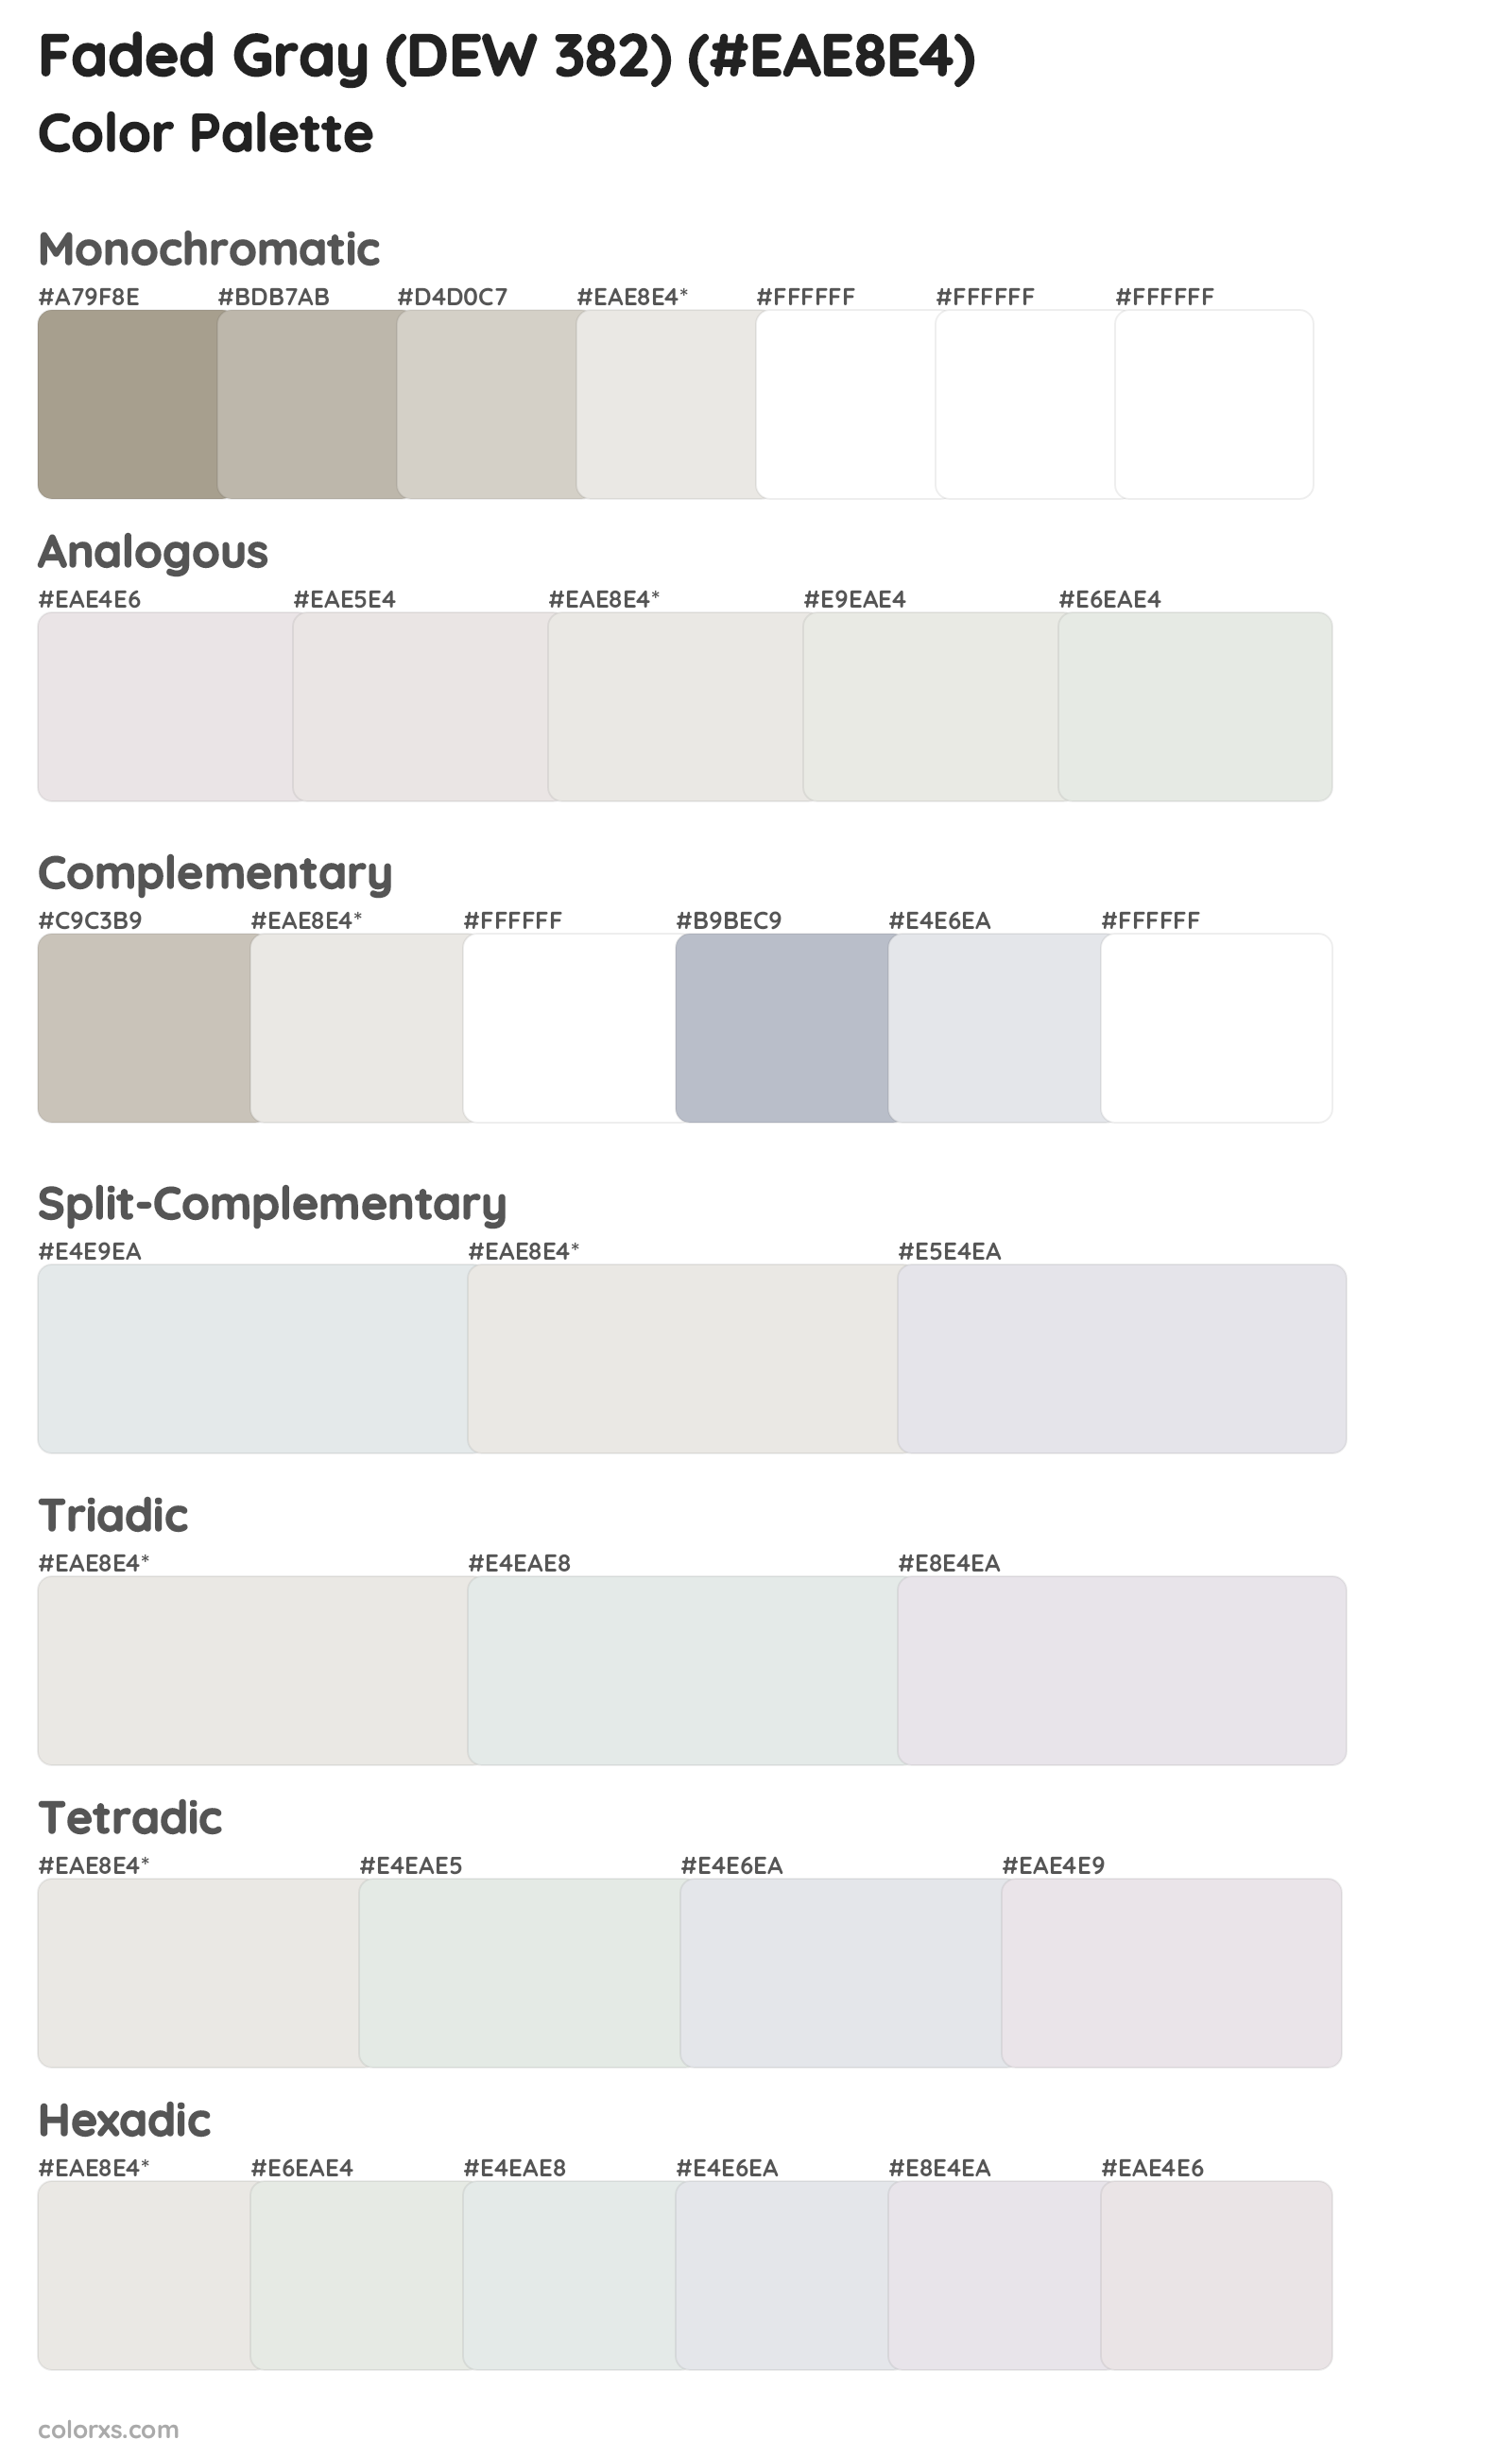 Faded Gray (DEW 382) Color Scheme Palettes